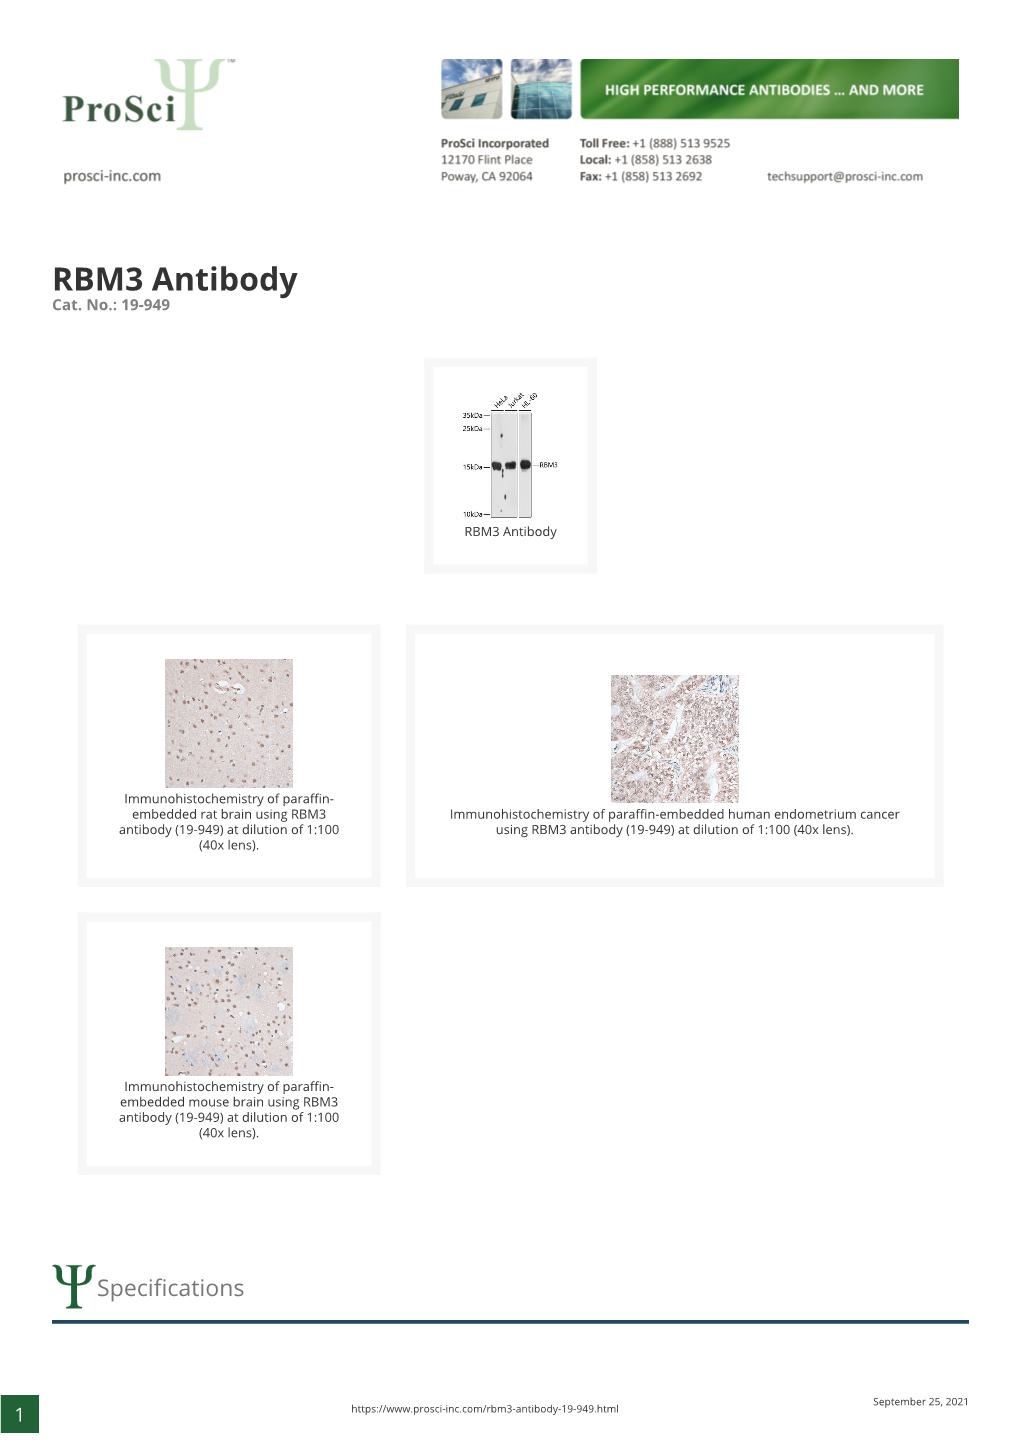 RBM3 Antibody Cat